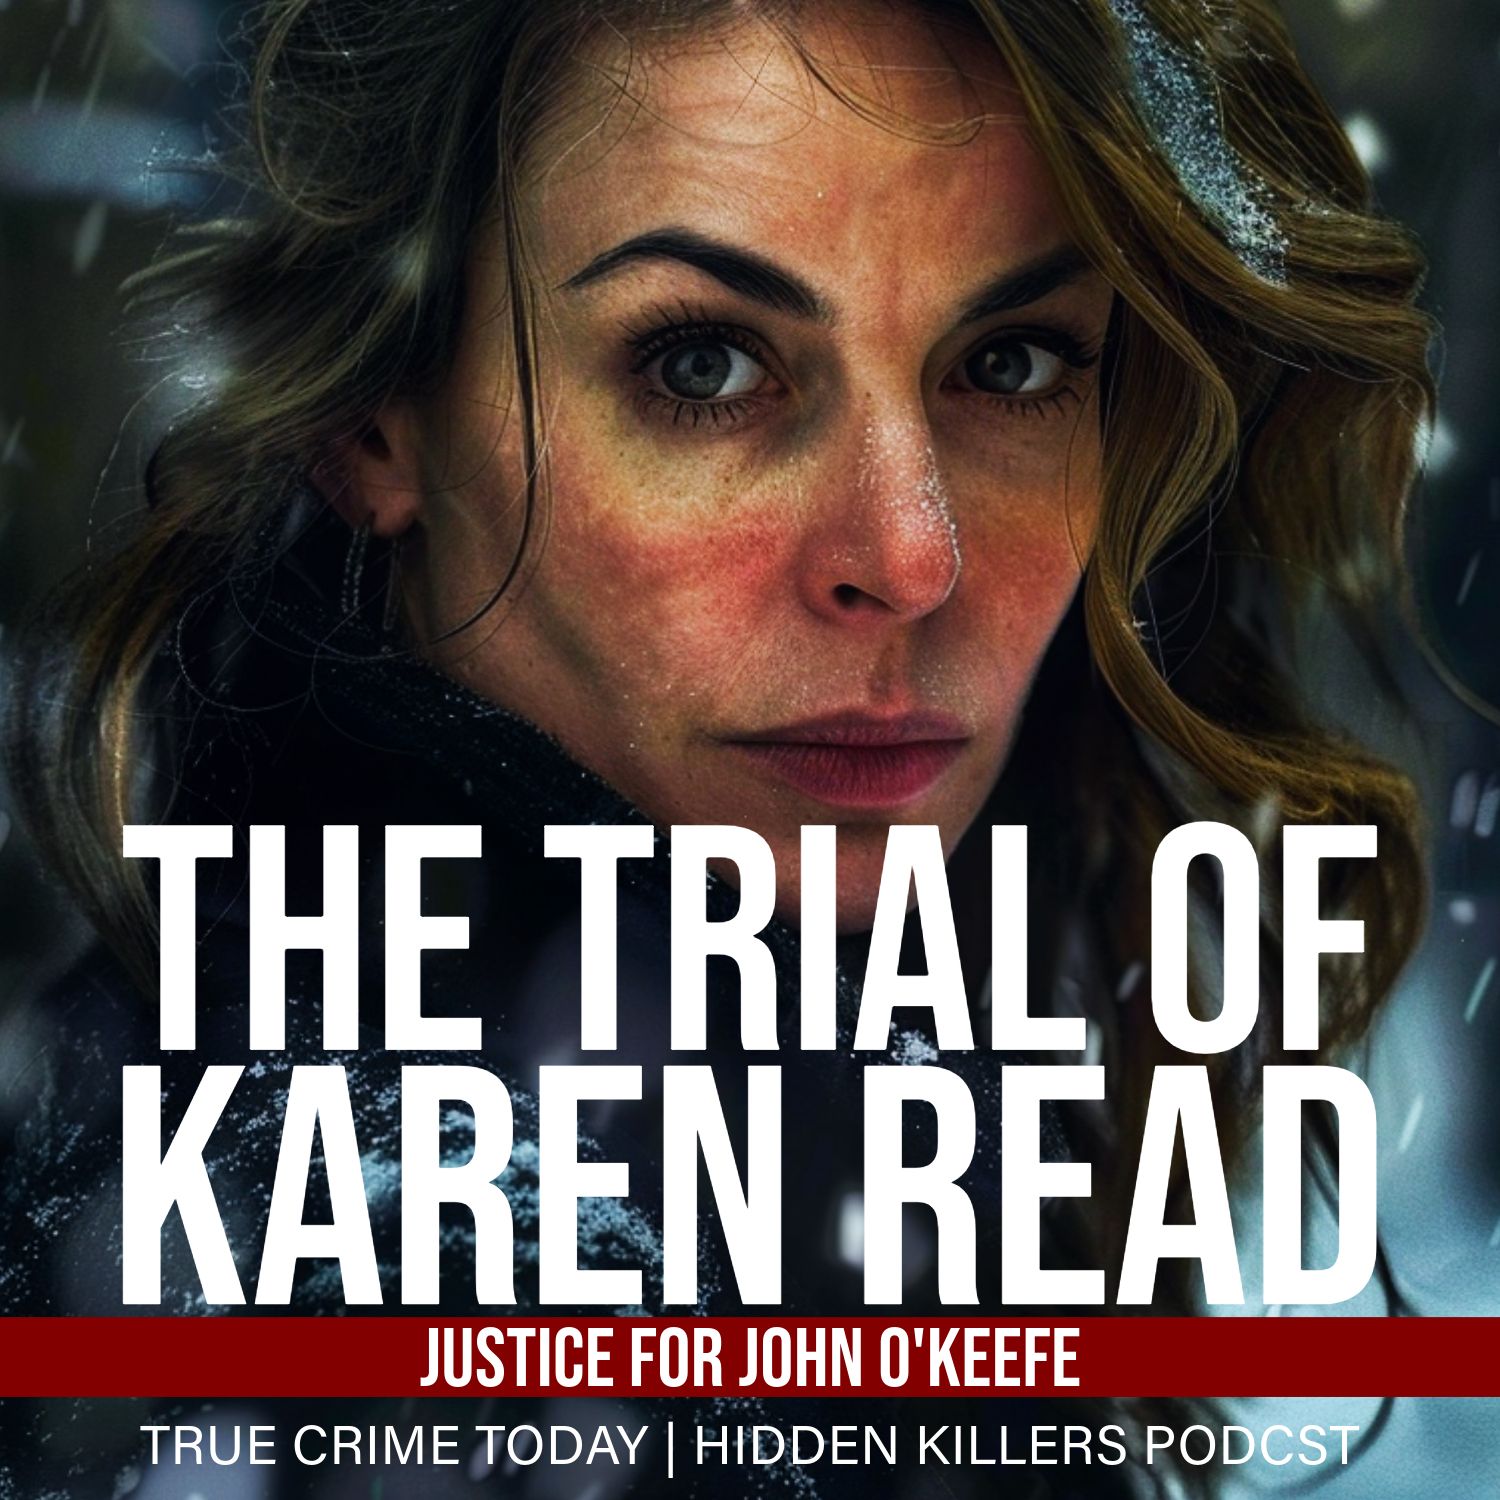 Prosecution and Defense Present Closing Arguments in Karen Read Murder Trial